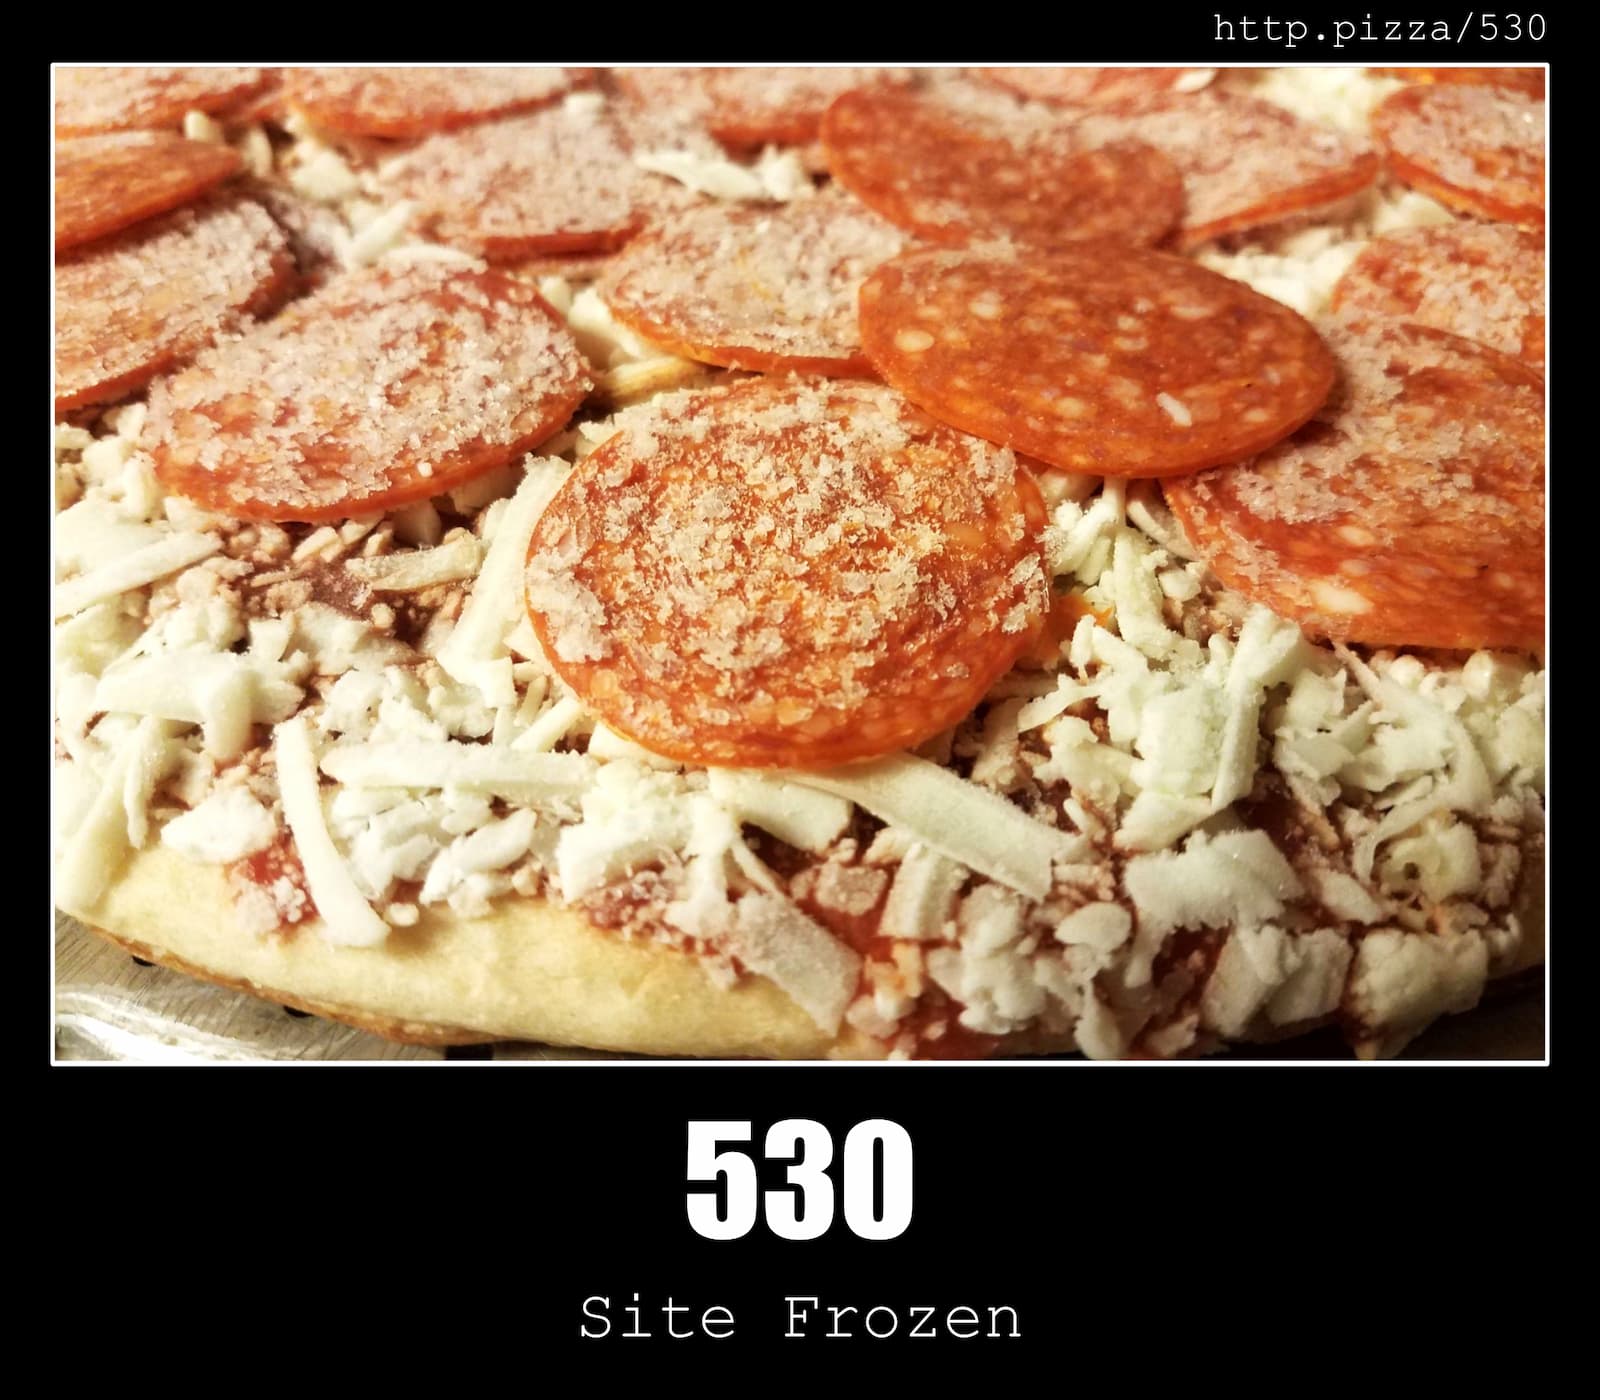 HTTP Status Code 530 Site Frozen & Pizzas